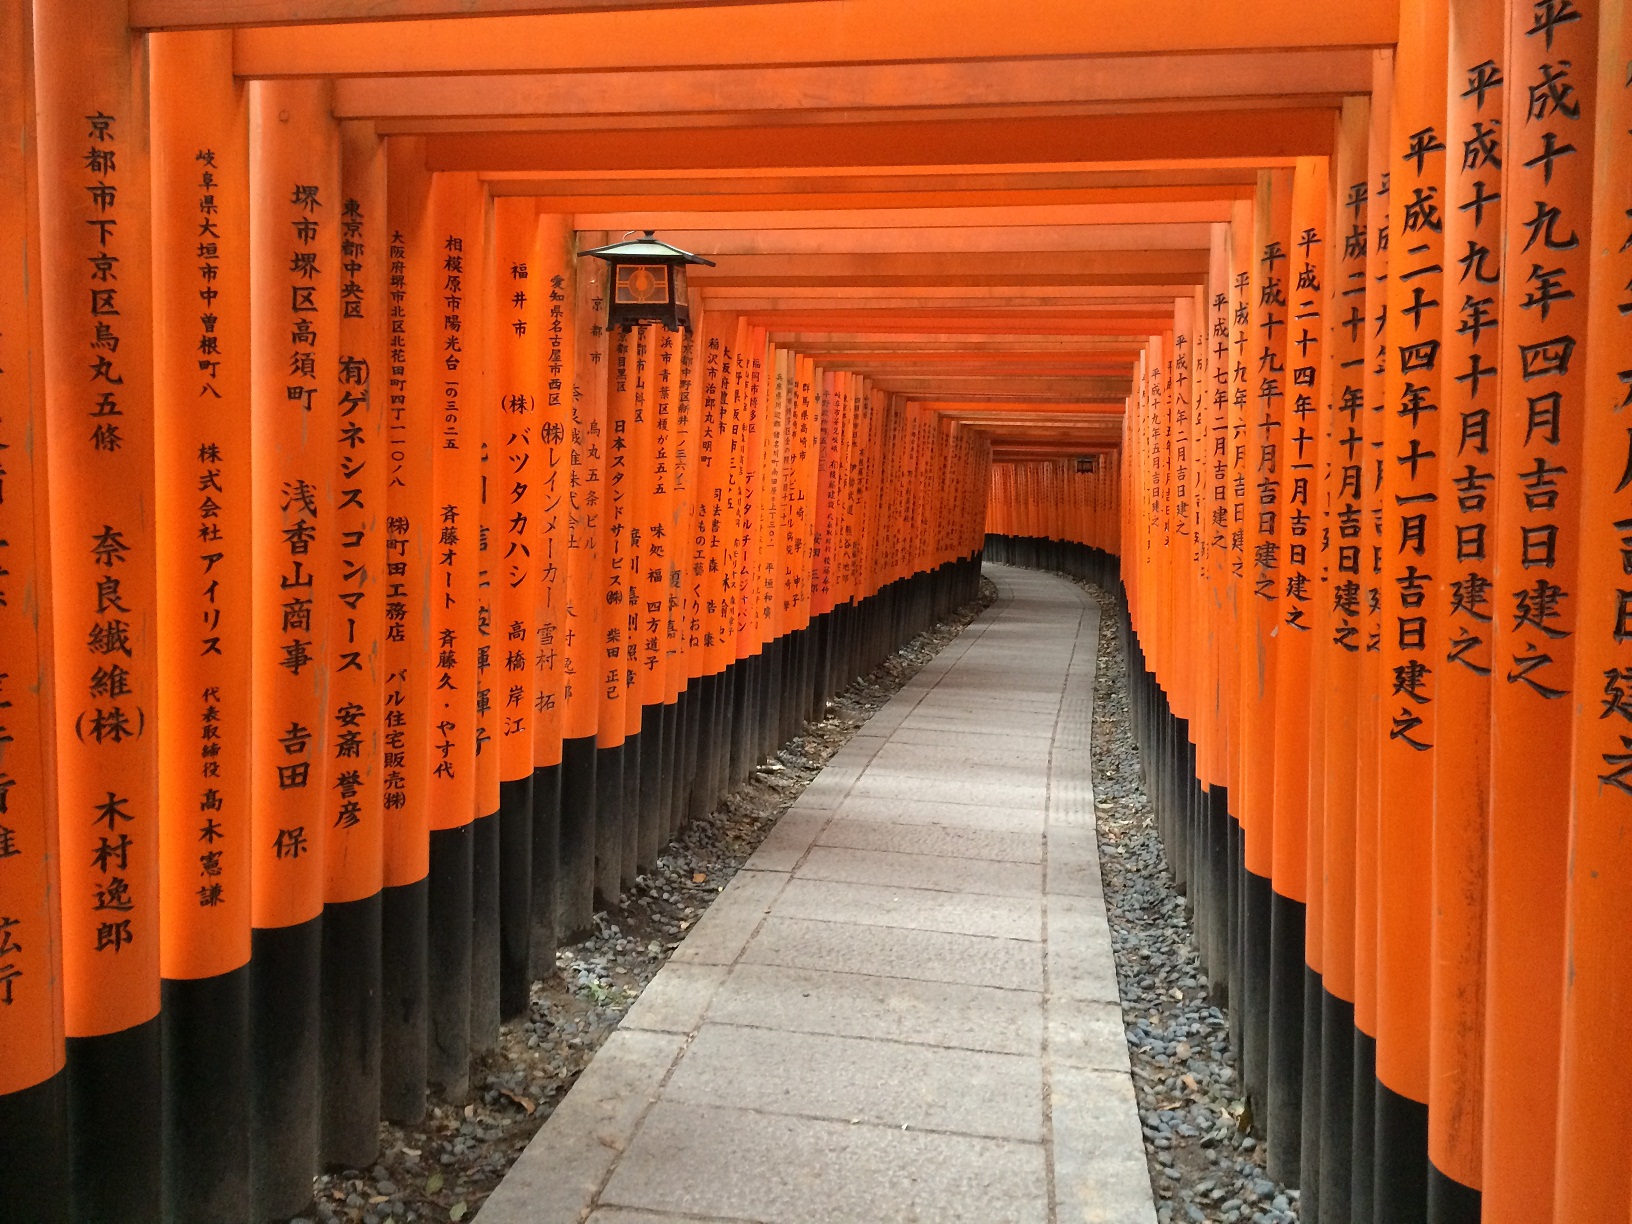 Gates at the Inari shrine in Kyoto